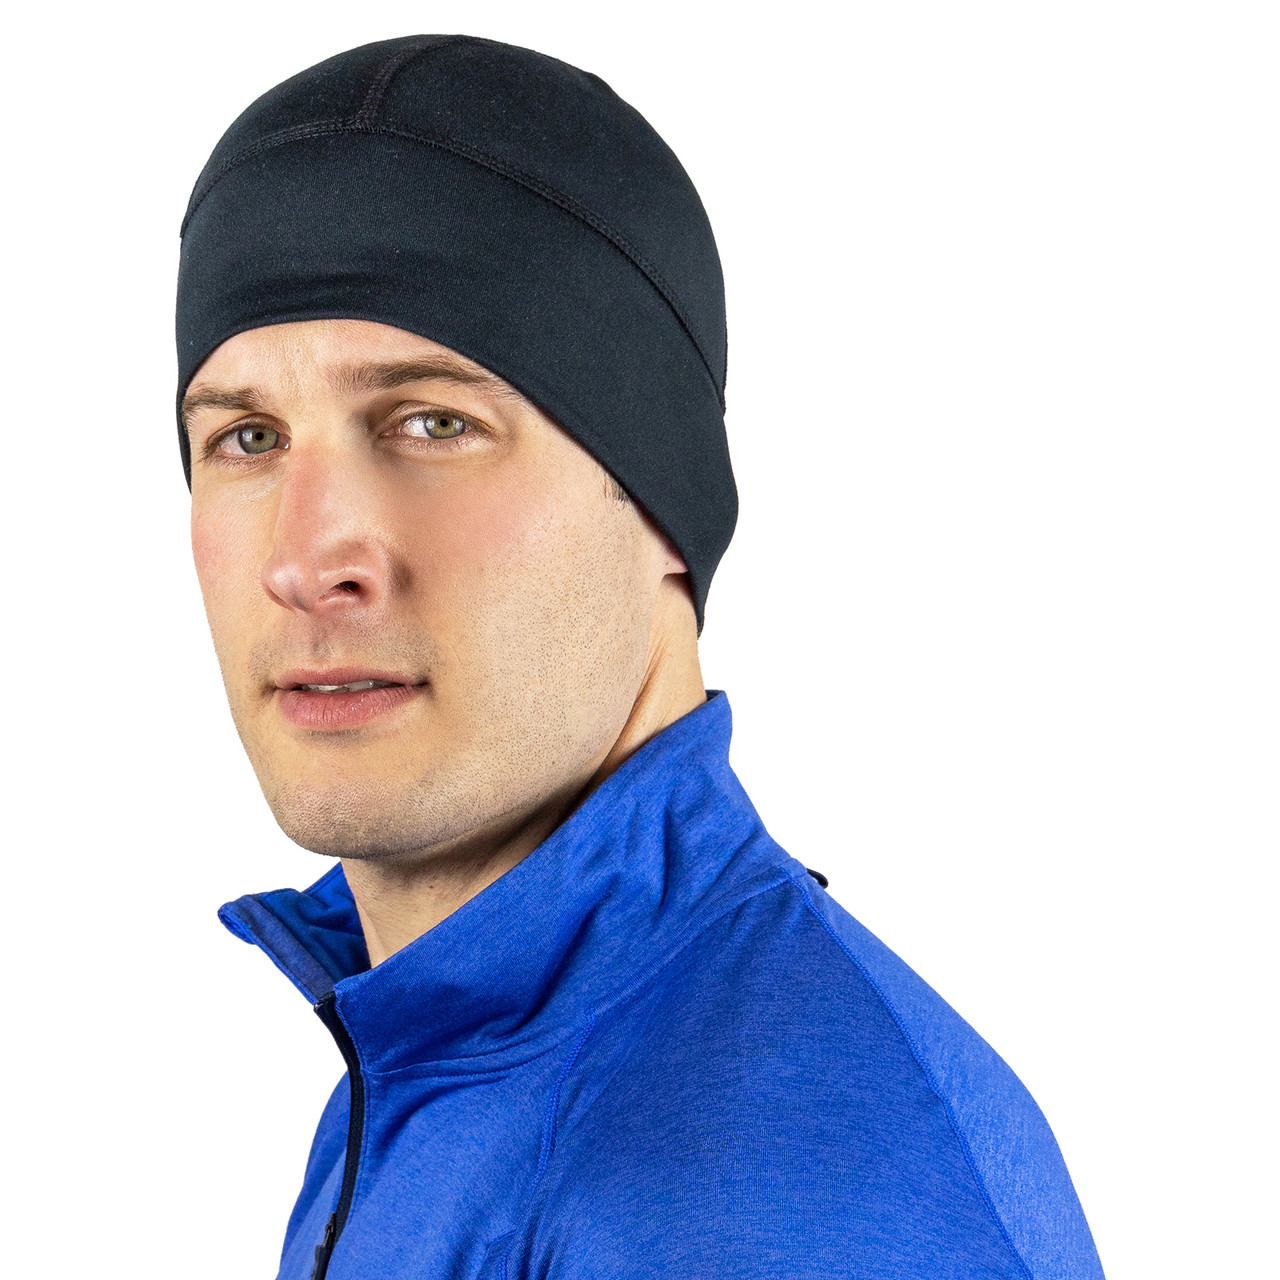 Tough Headwear Winter Neck Warmer w/Helmet Liner - Neck Gator for Warmth -  Motorcycle Helmet Liner w/Neck Cover for Men